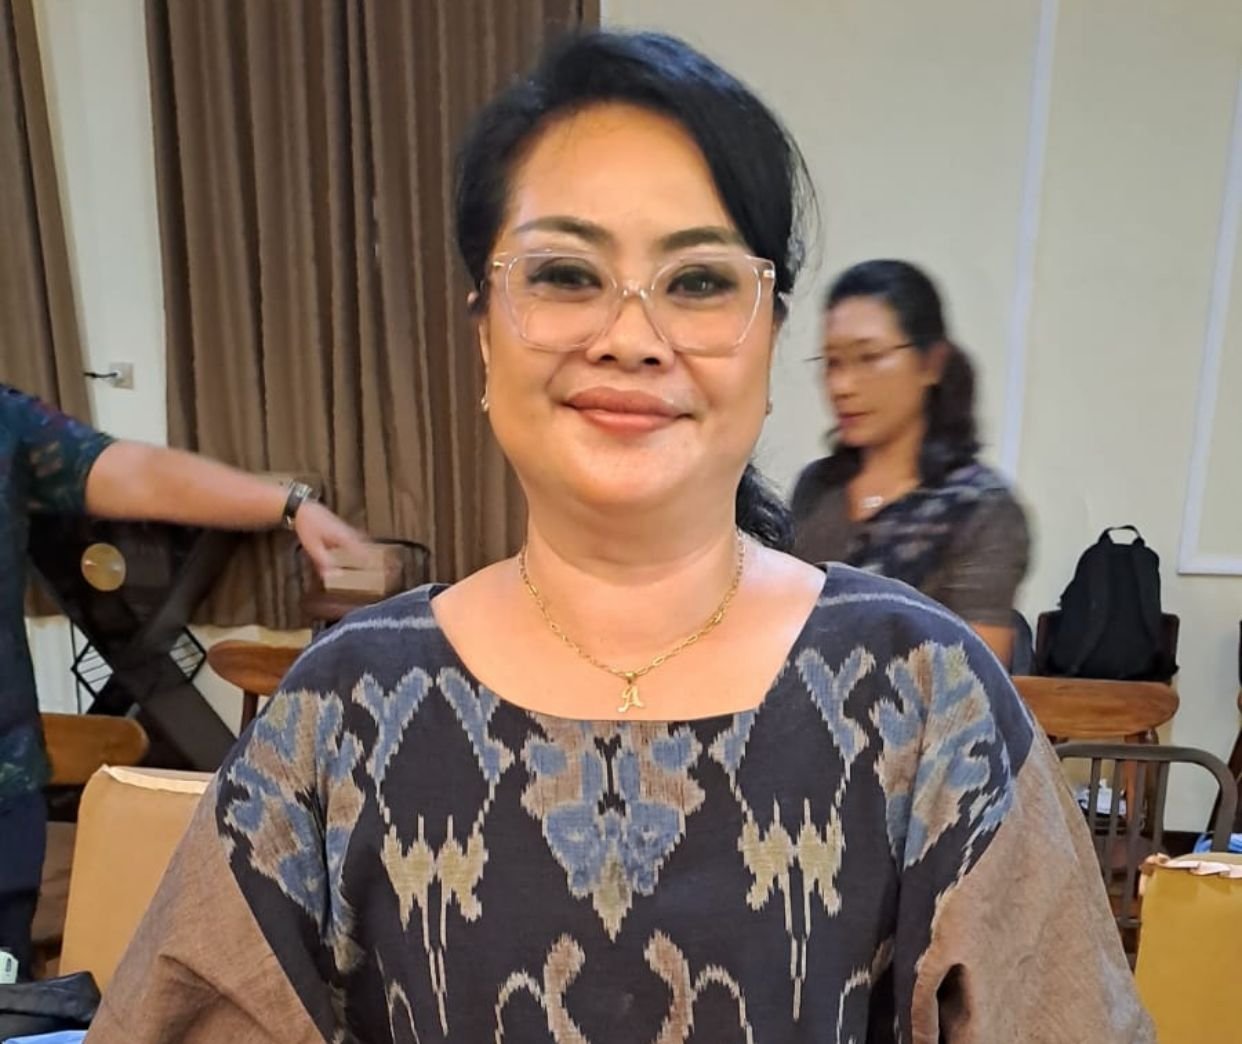 Musda II IHGMA Bali Ajang Pemilihan Ketua Baru 2023-2026